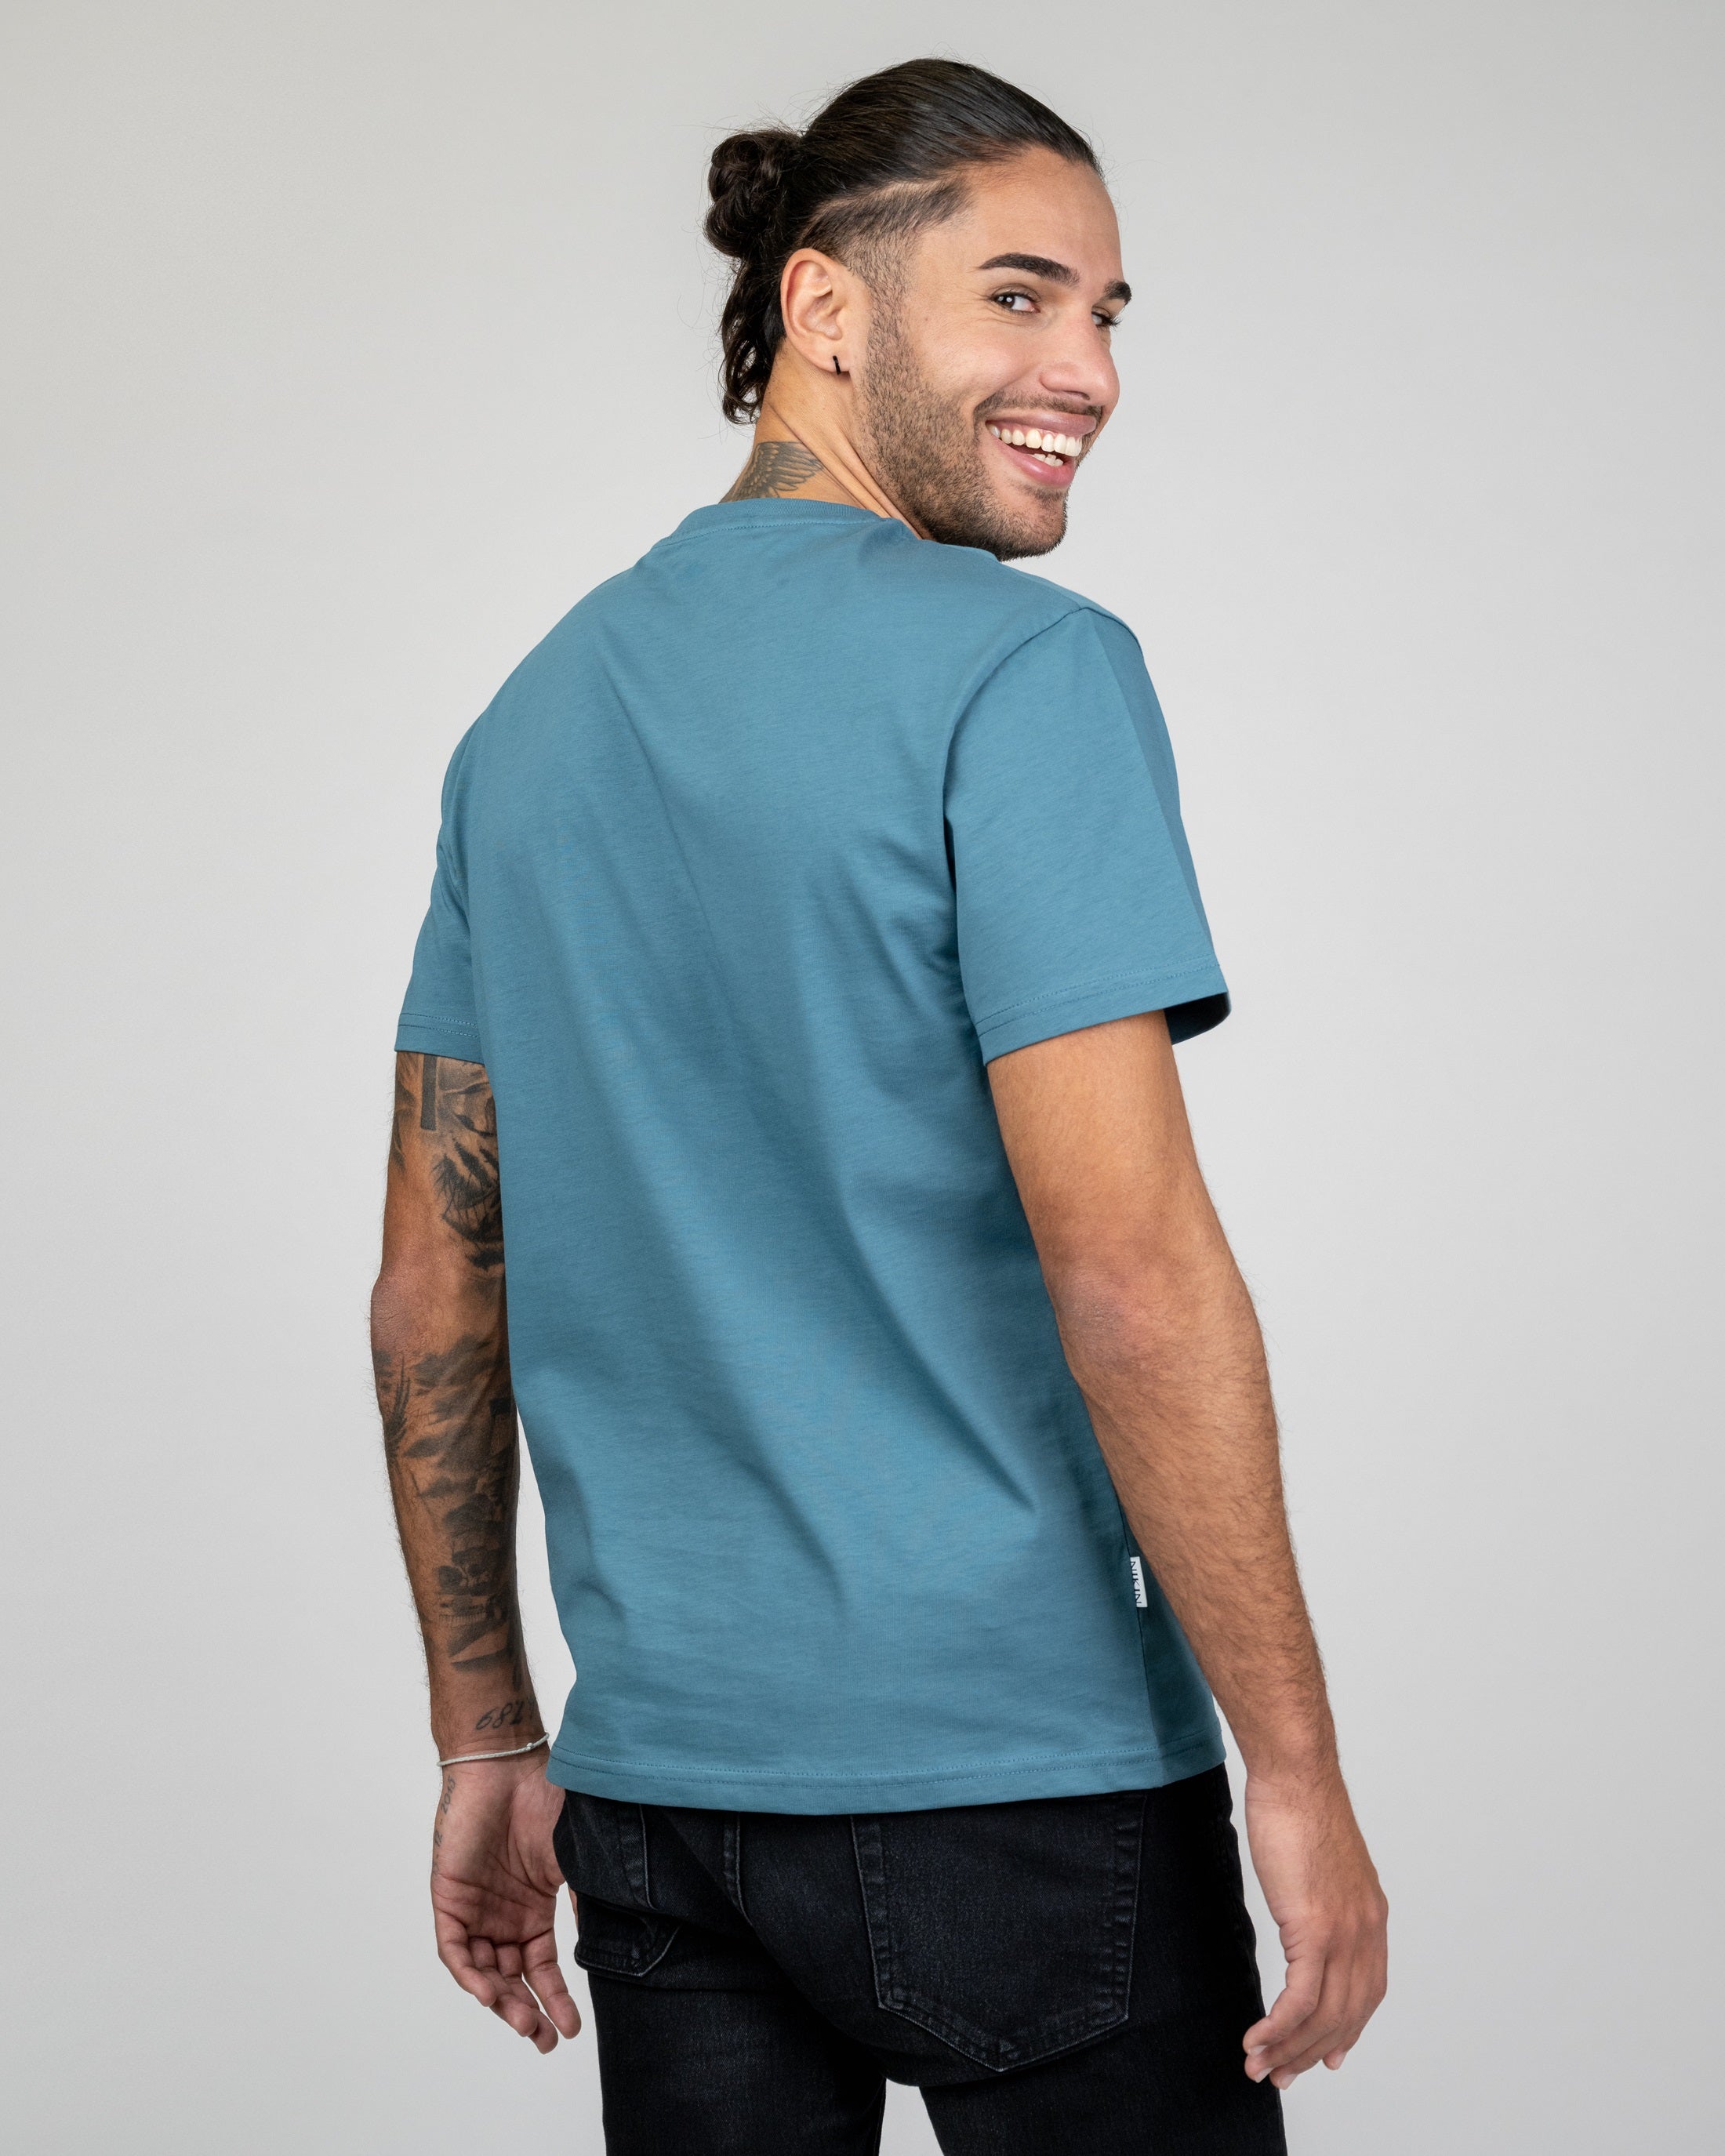 Men's organic cotton T-shirt Treeshirt Faded Teal